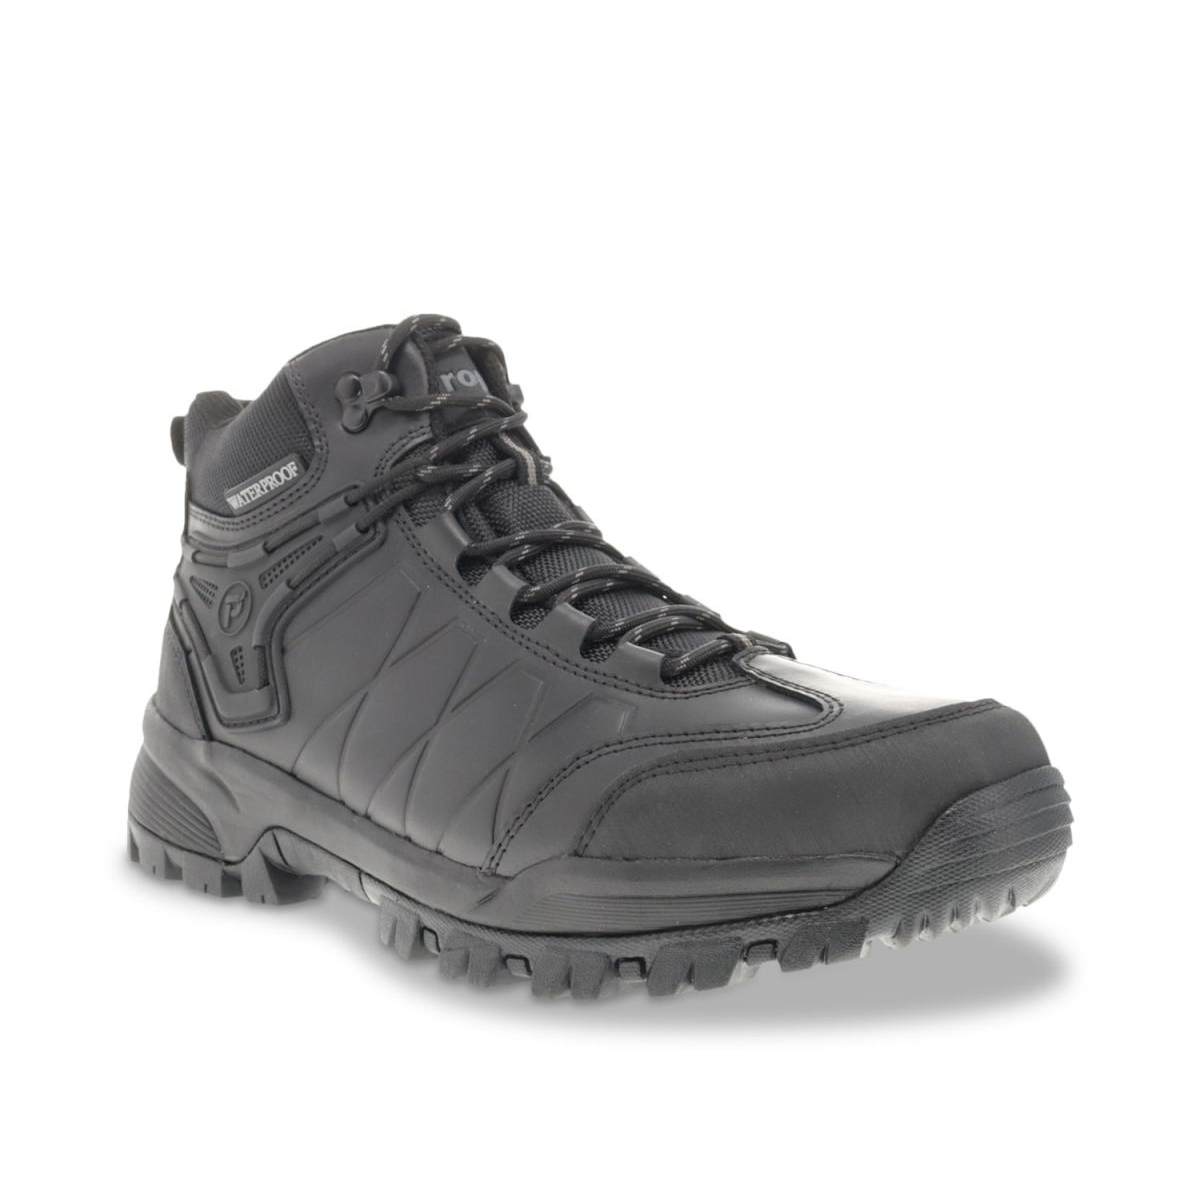 Propet Men's Ridge Walker Force Hiking Boots Black - MBA052LBLK BLACK - BLACK, 15 XX-Wide